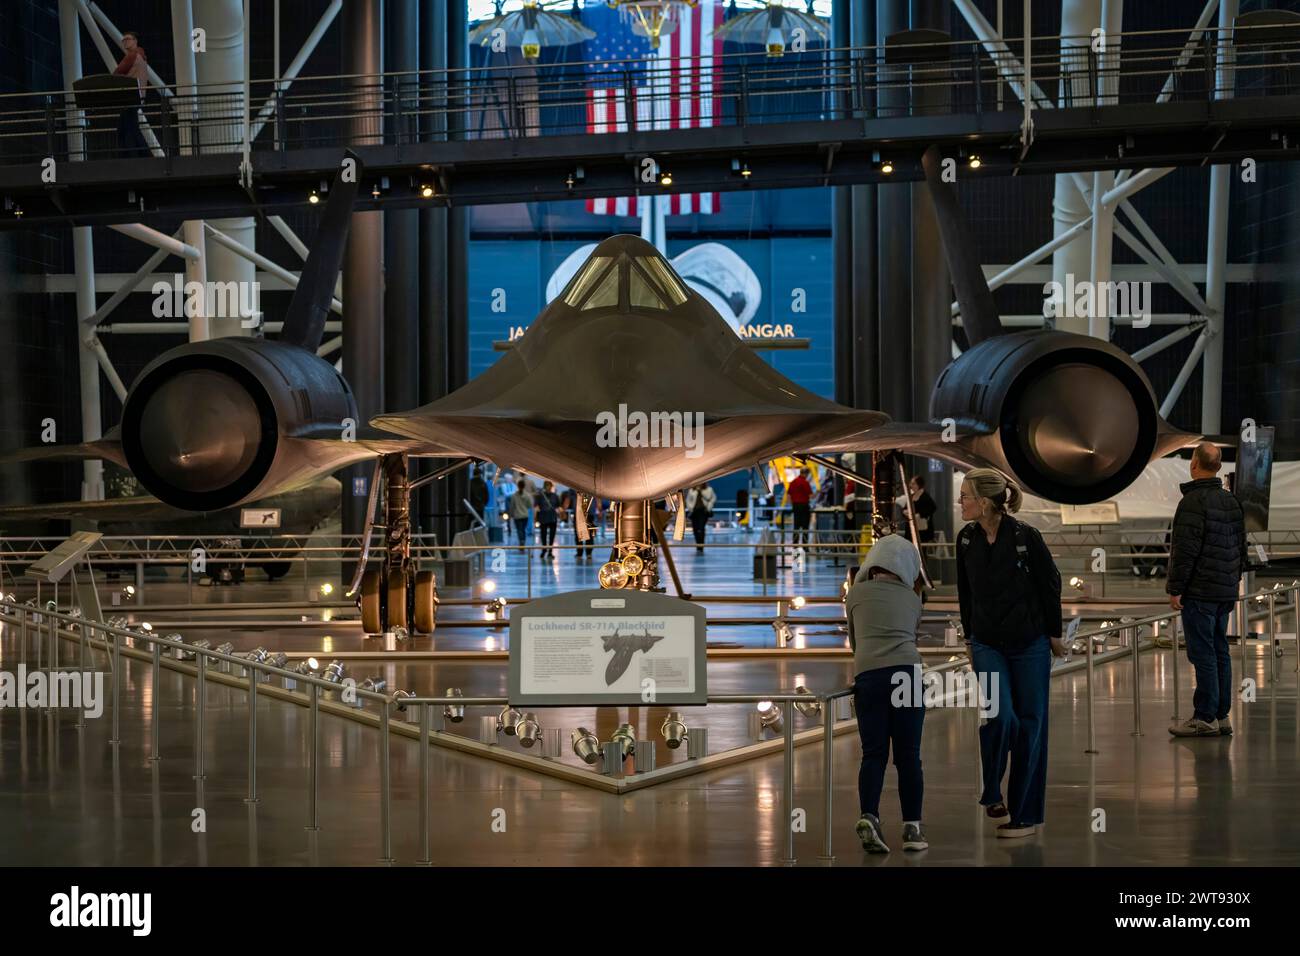 Museumsbesucher erkunden den Lockheed SR-71 Blackbird im Steven F. Udvar-Hazy Center National Air and Space Museum in Chantilly, Virginia. Stockfoto